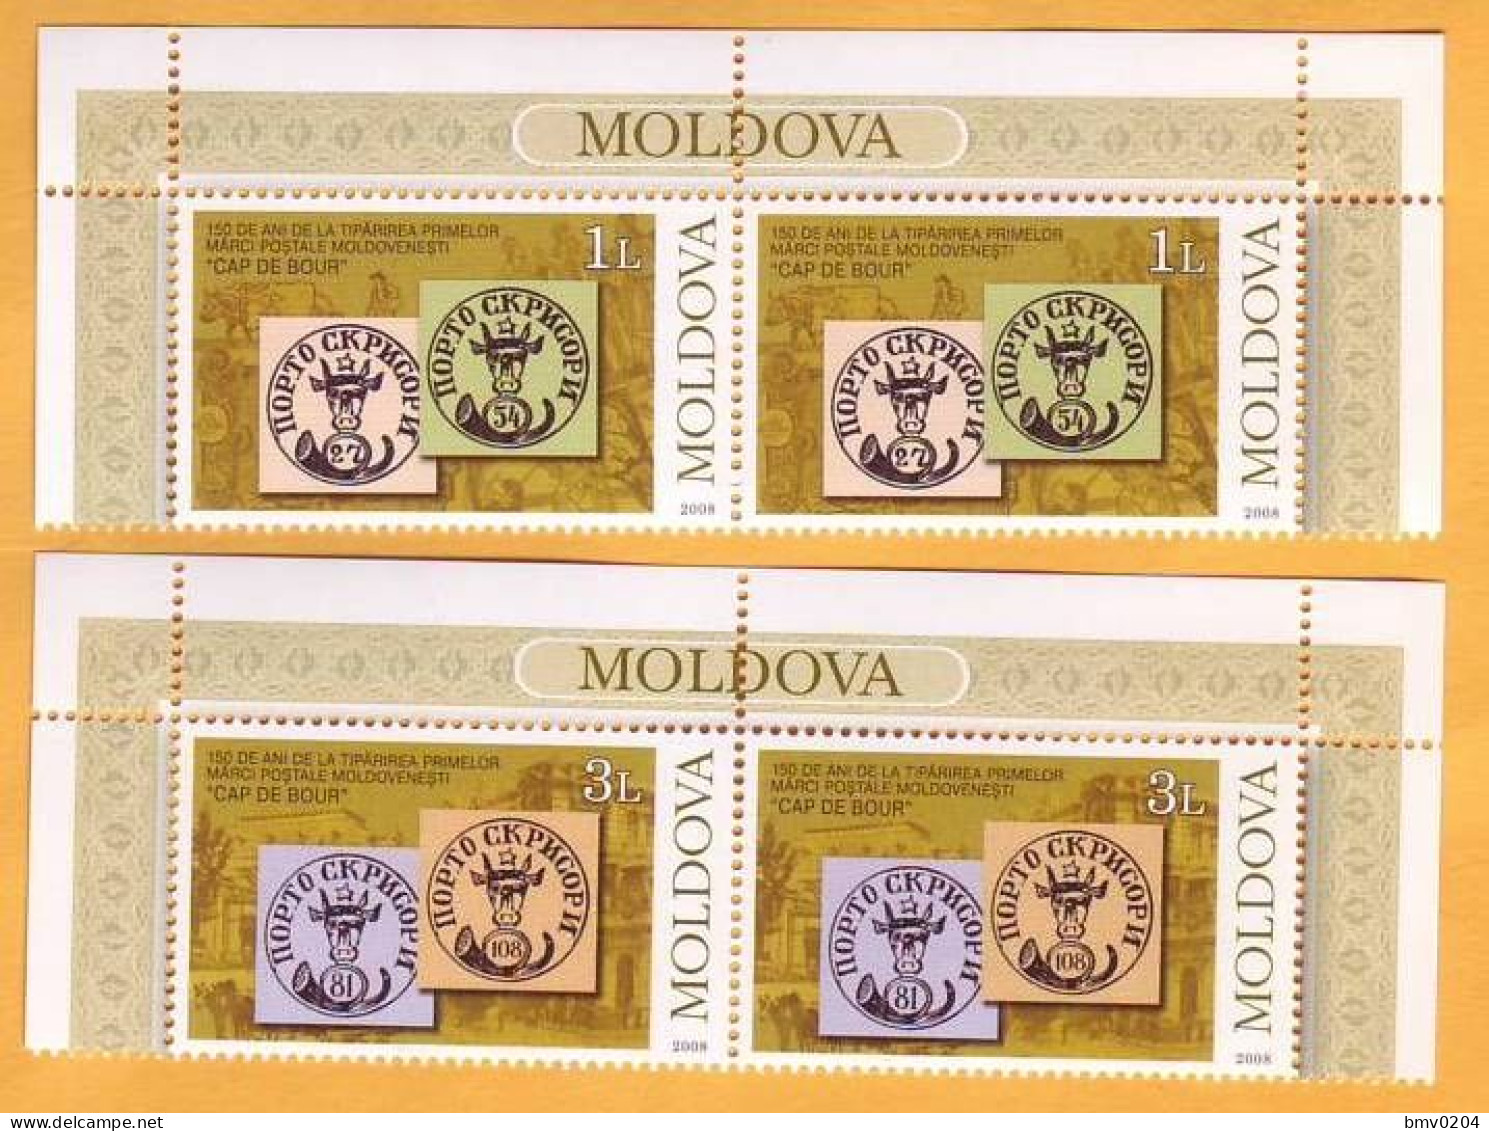 2008 Moldova Moldavie 150. Edition Of The First Postage Stamps Of The Moldavian Principality "Cap De Bour" 2x2v Mint. - Moldavië